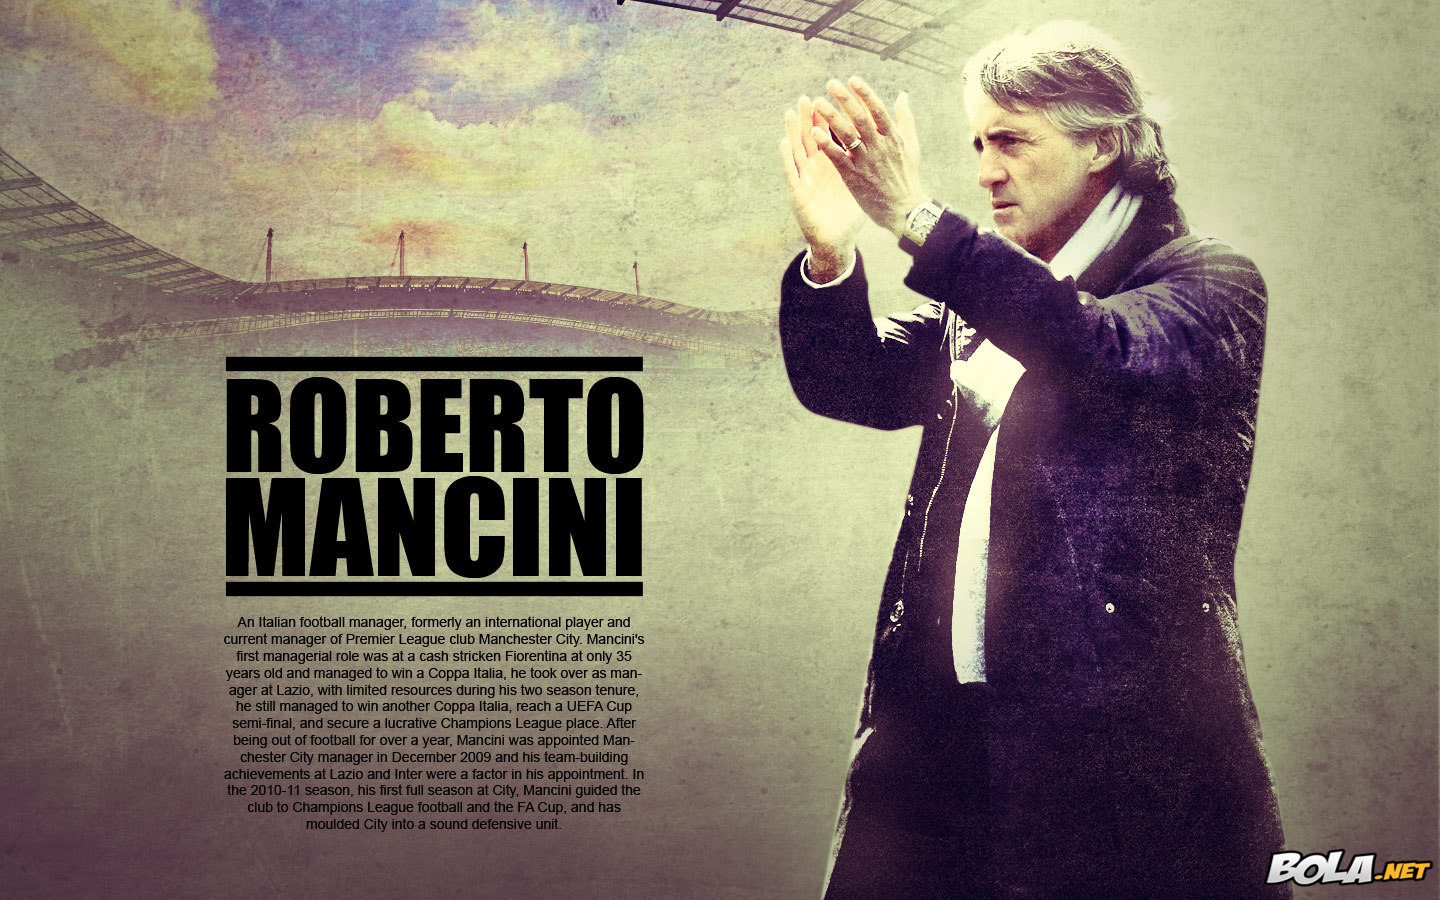 Deskripsi : Wallpaper Roberto Mancini, size: 1440x900